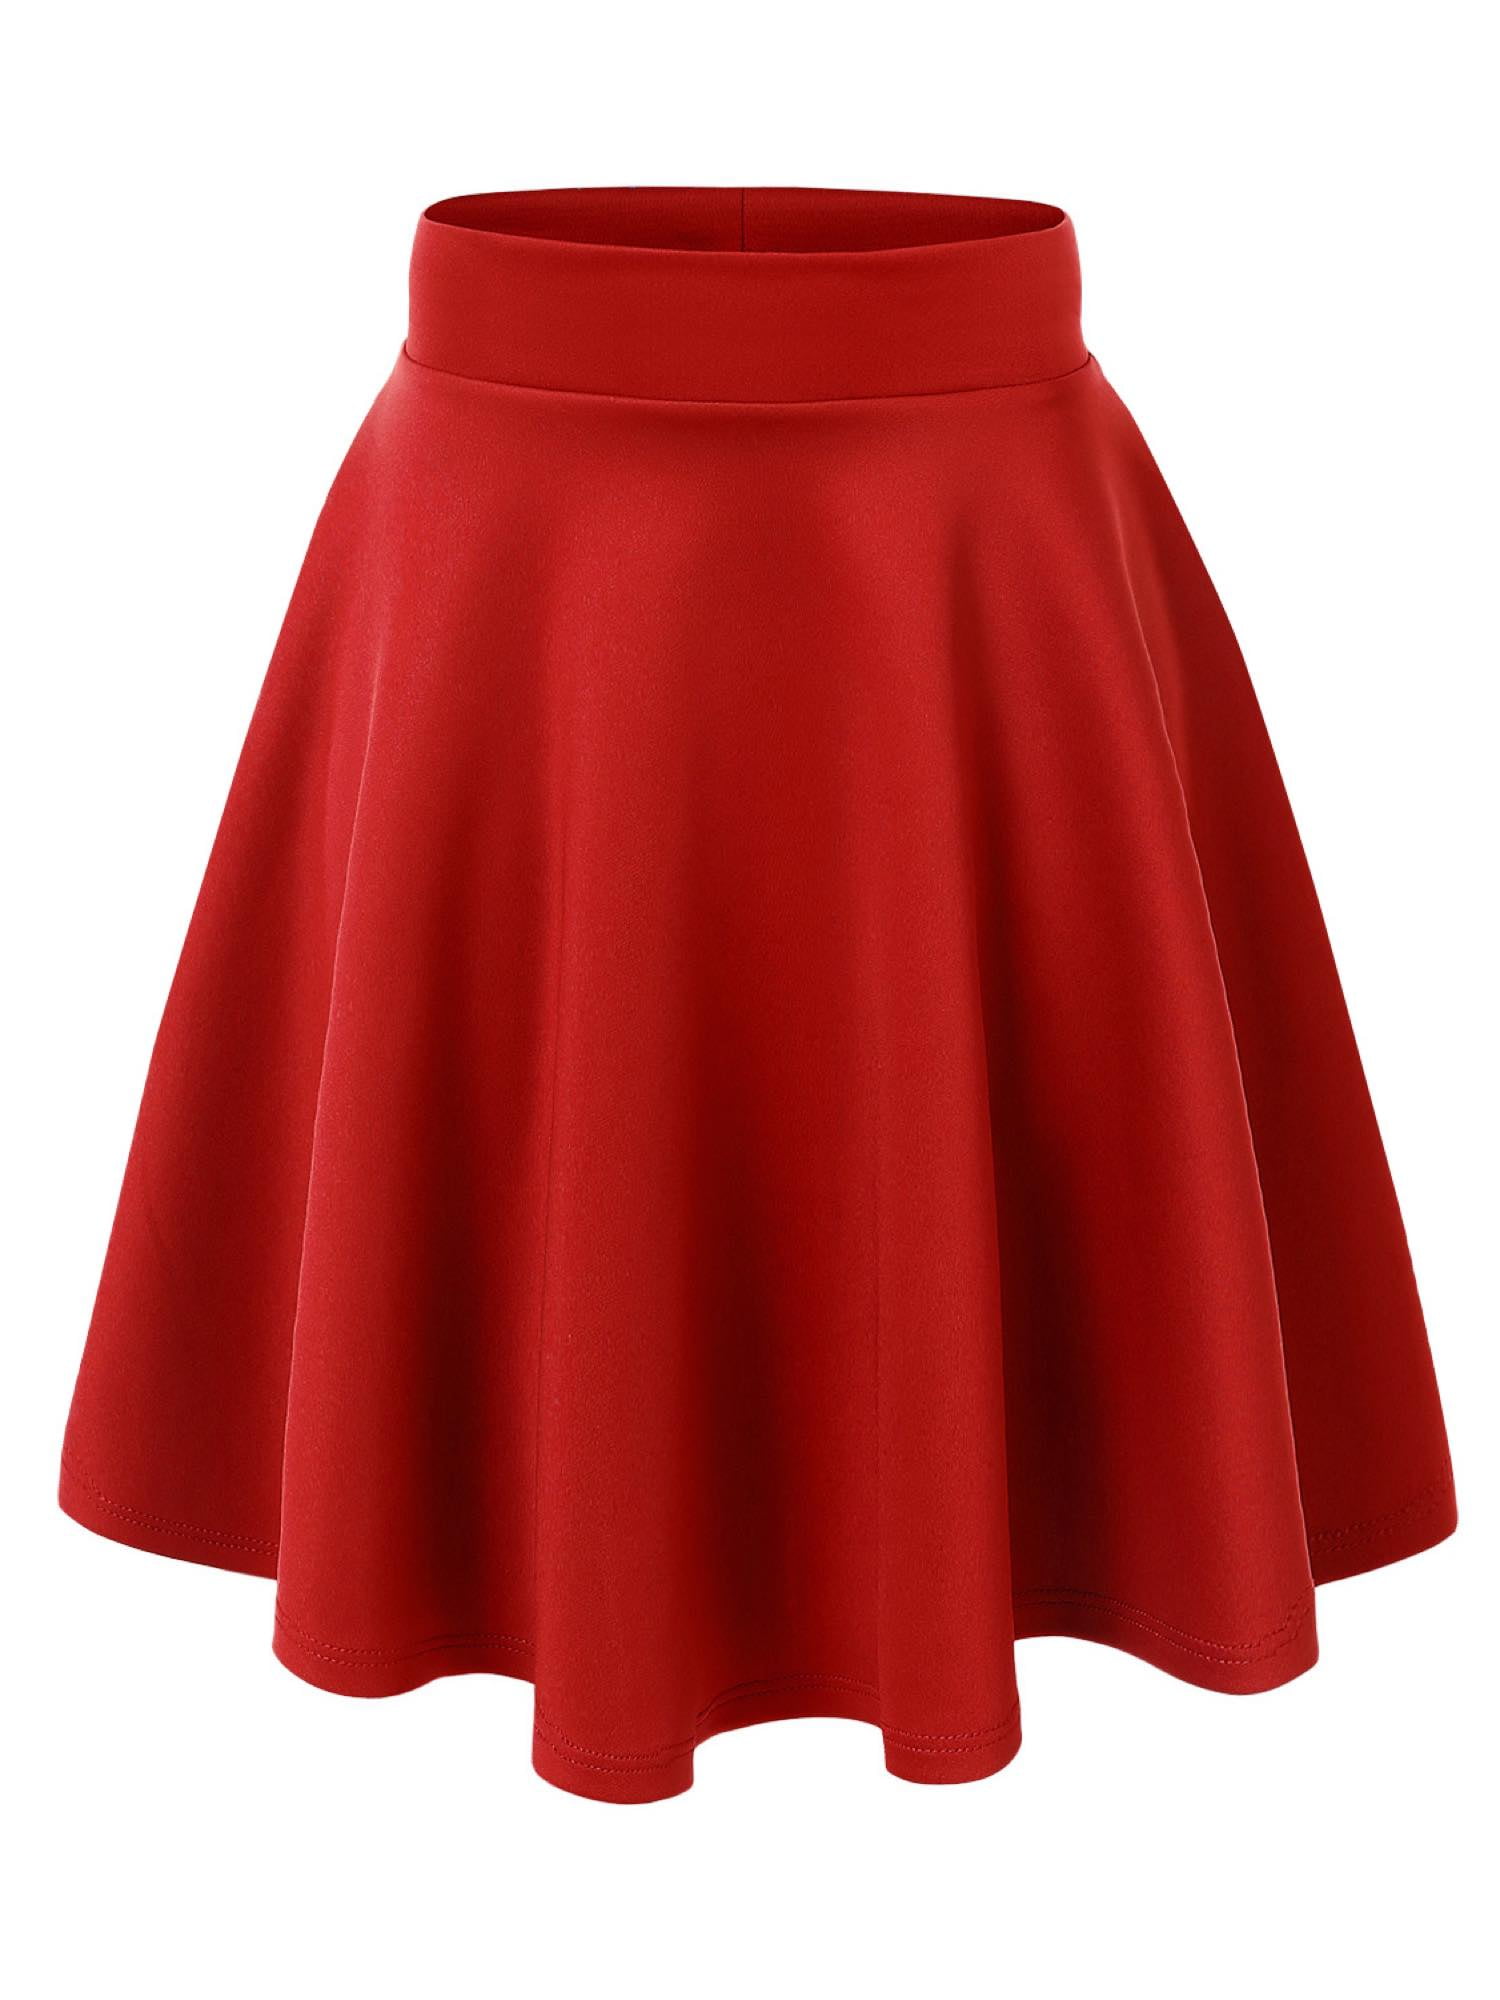 MBJ WB829 Womens Flirty Flare Skirt L RED - Walmart.com